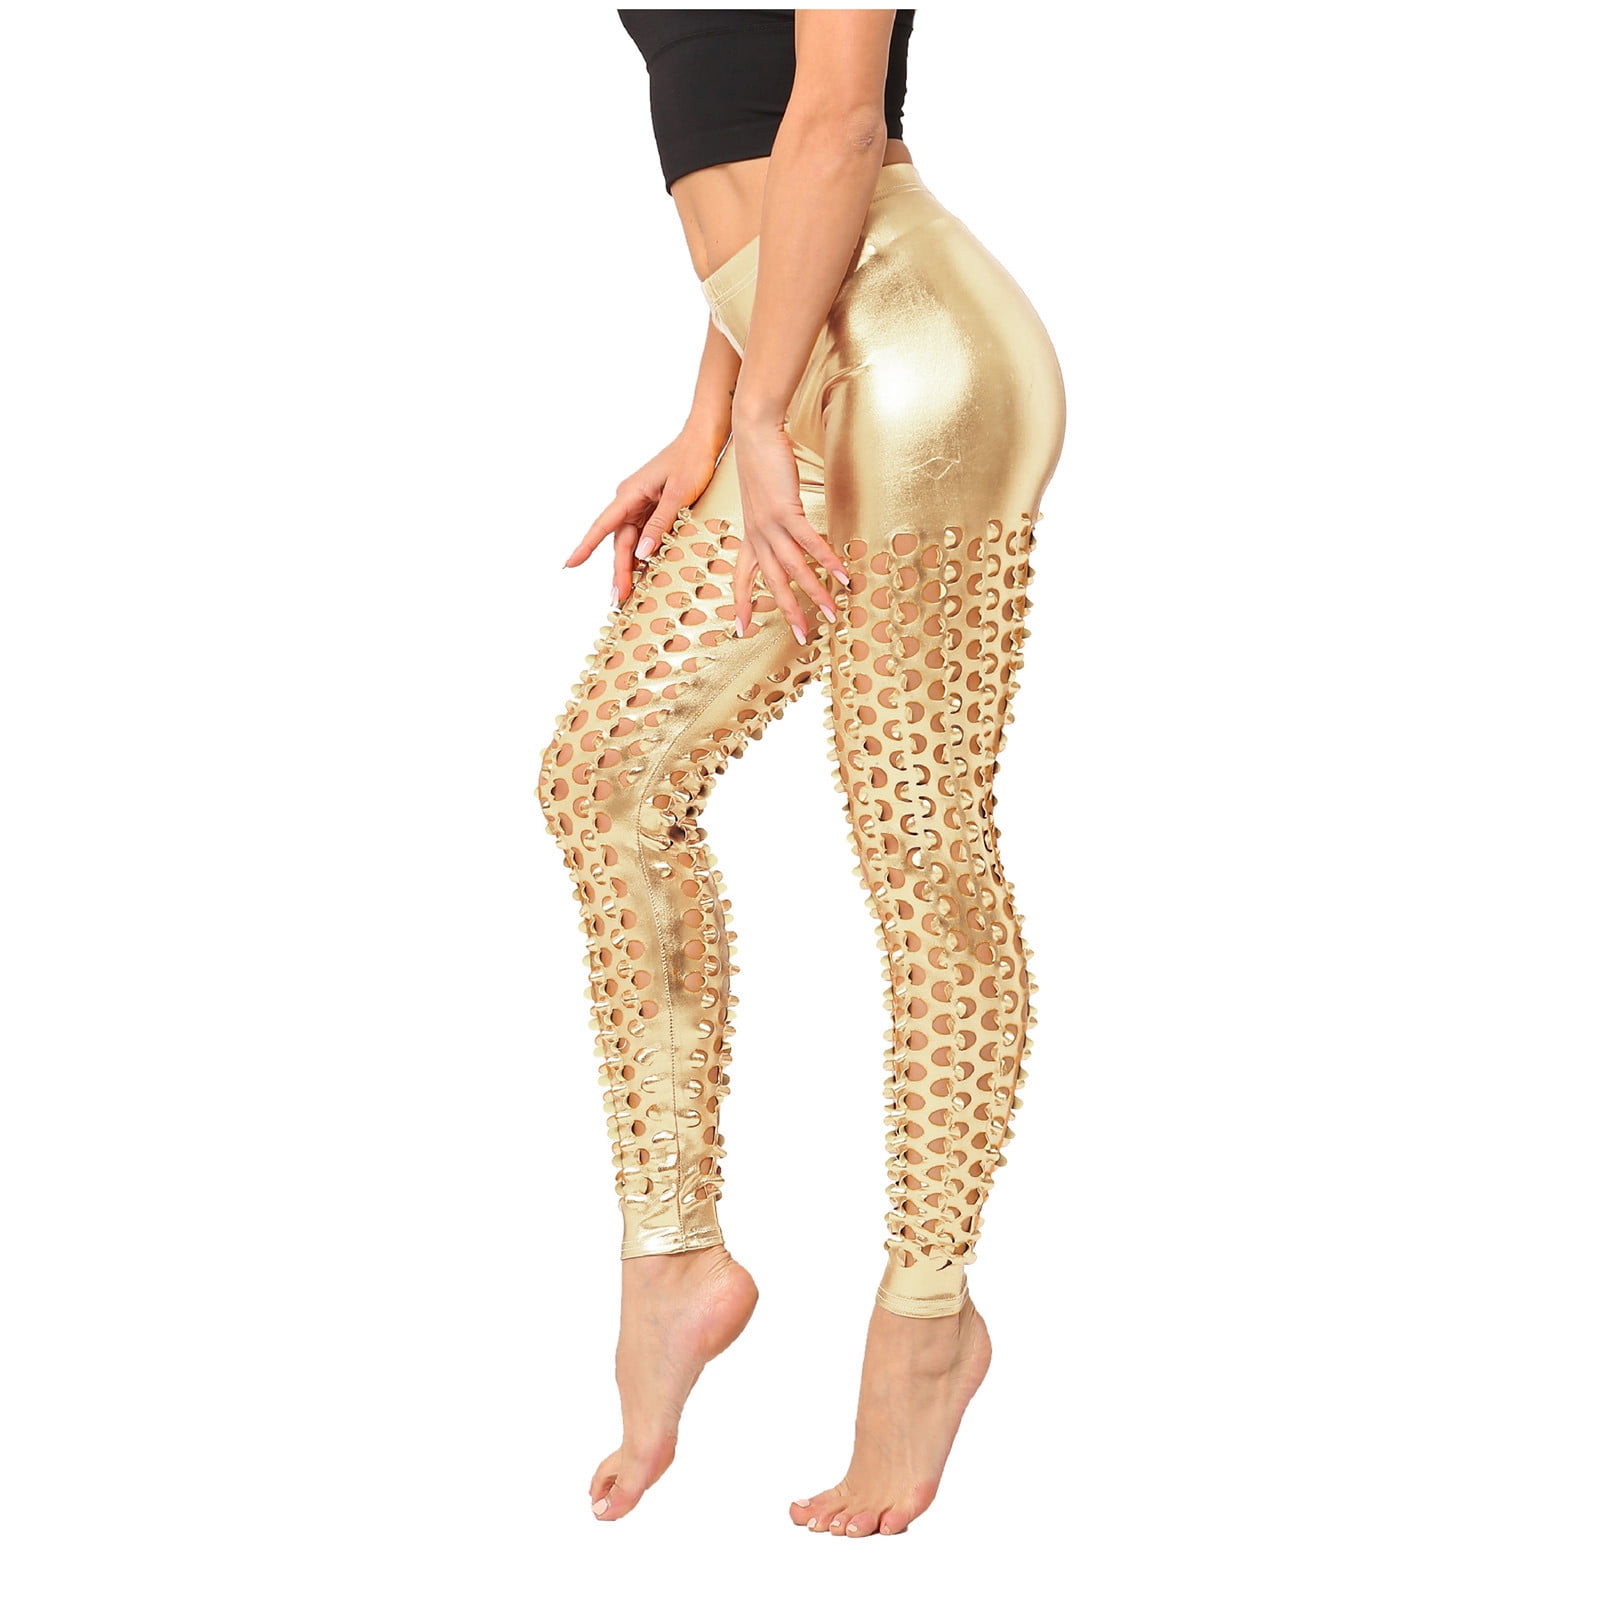 Gold Metallic Foil Leggings Golden Wet Look Tights Women Workout Clothing  Gym Shiny Bling Bling Yoga Pants Gym Shaping Push up Bottoms Plus 